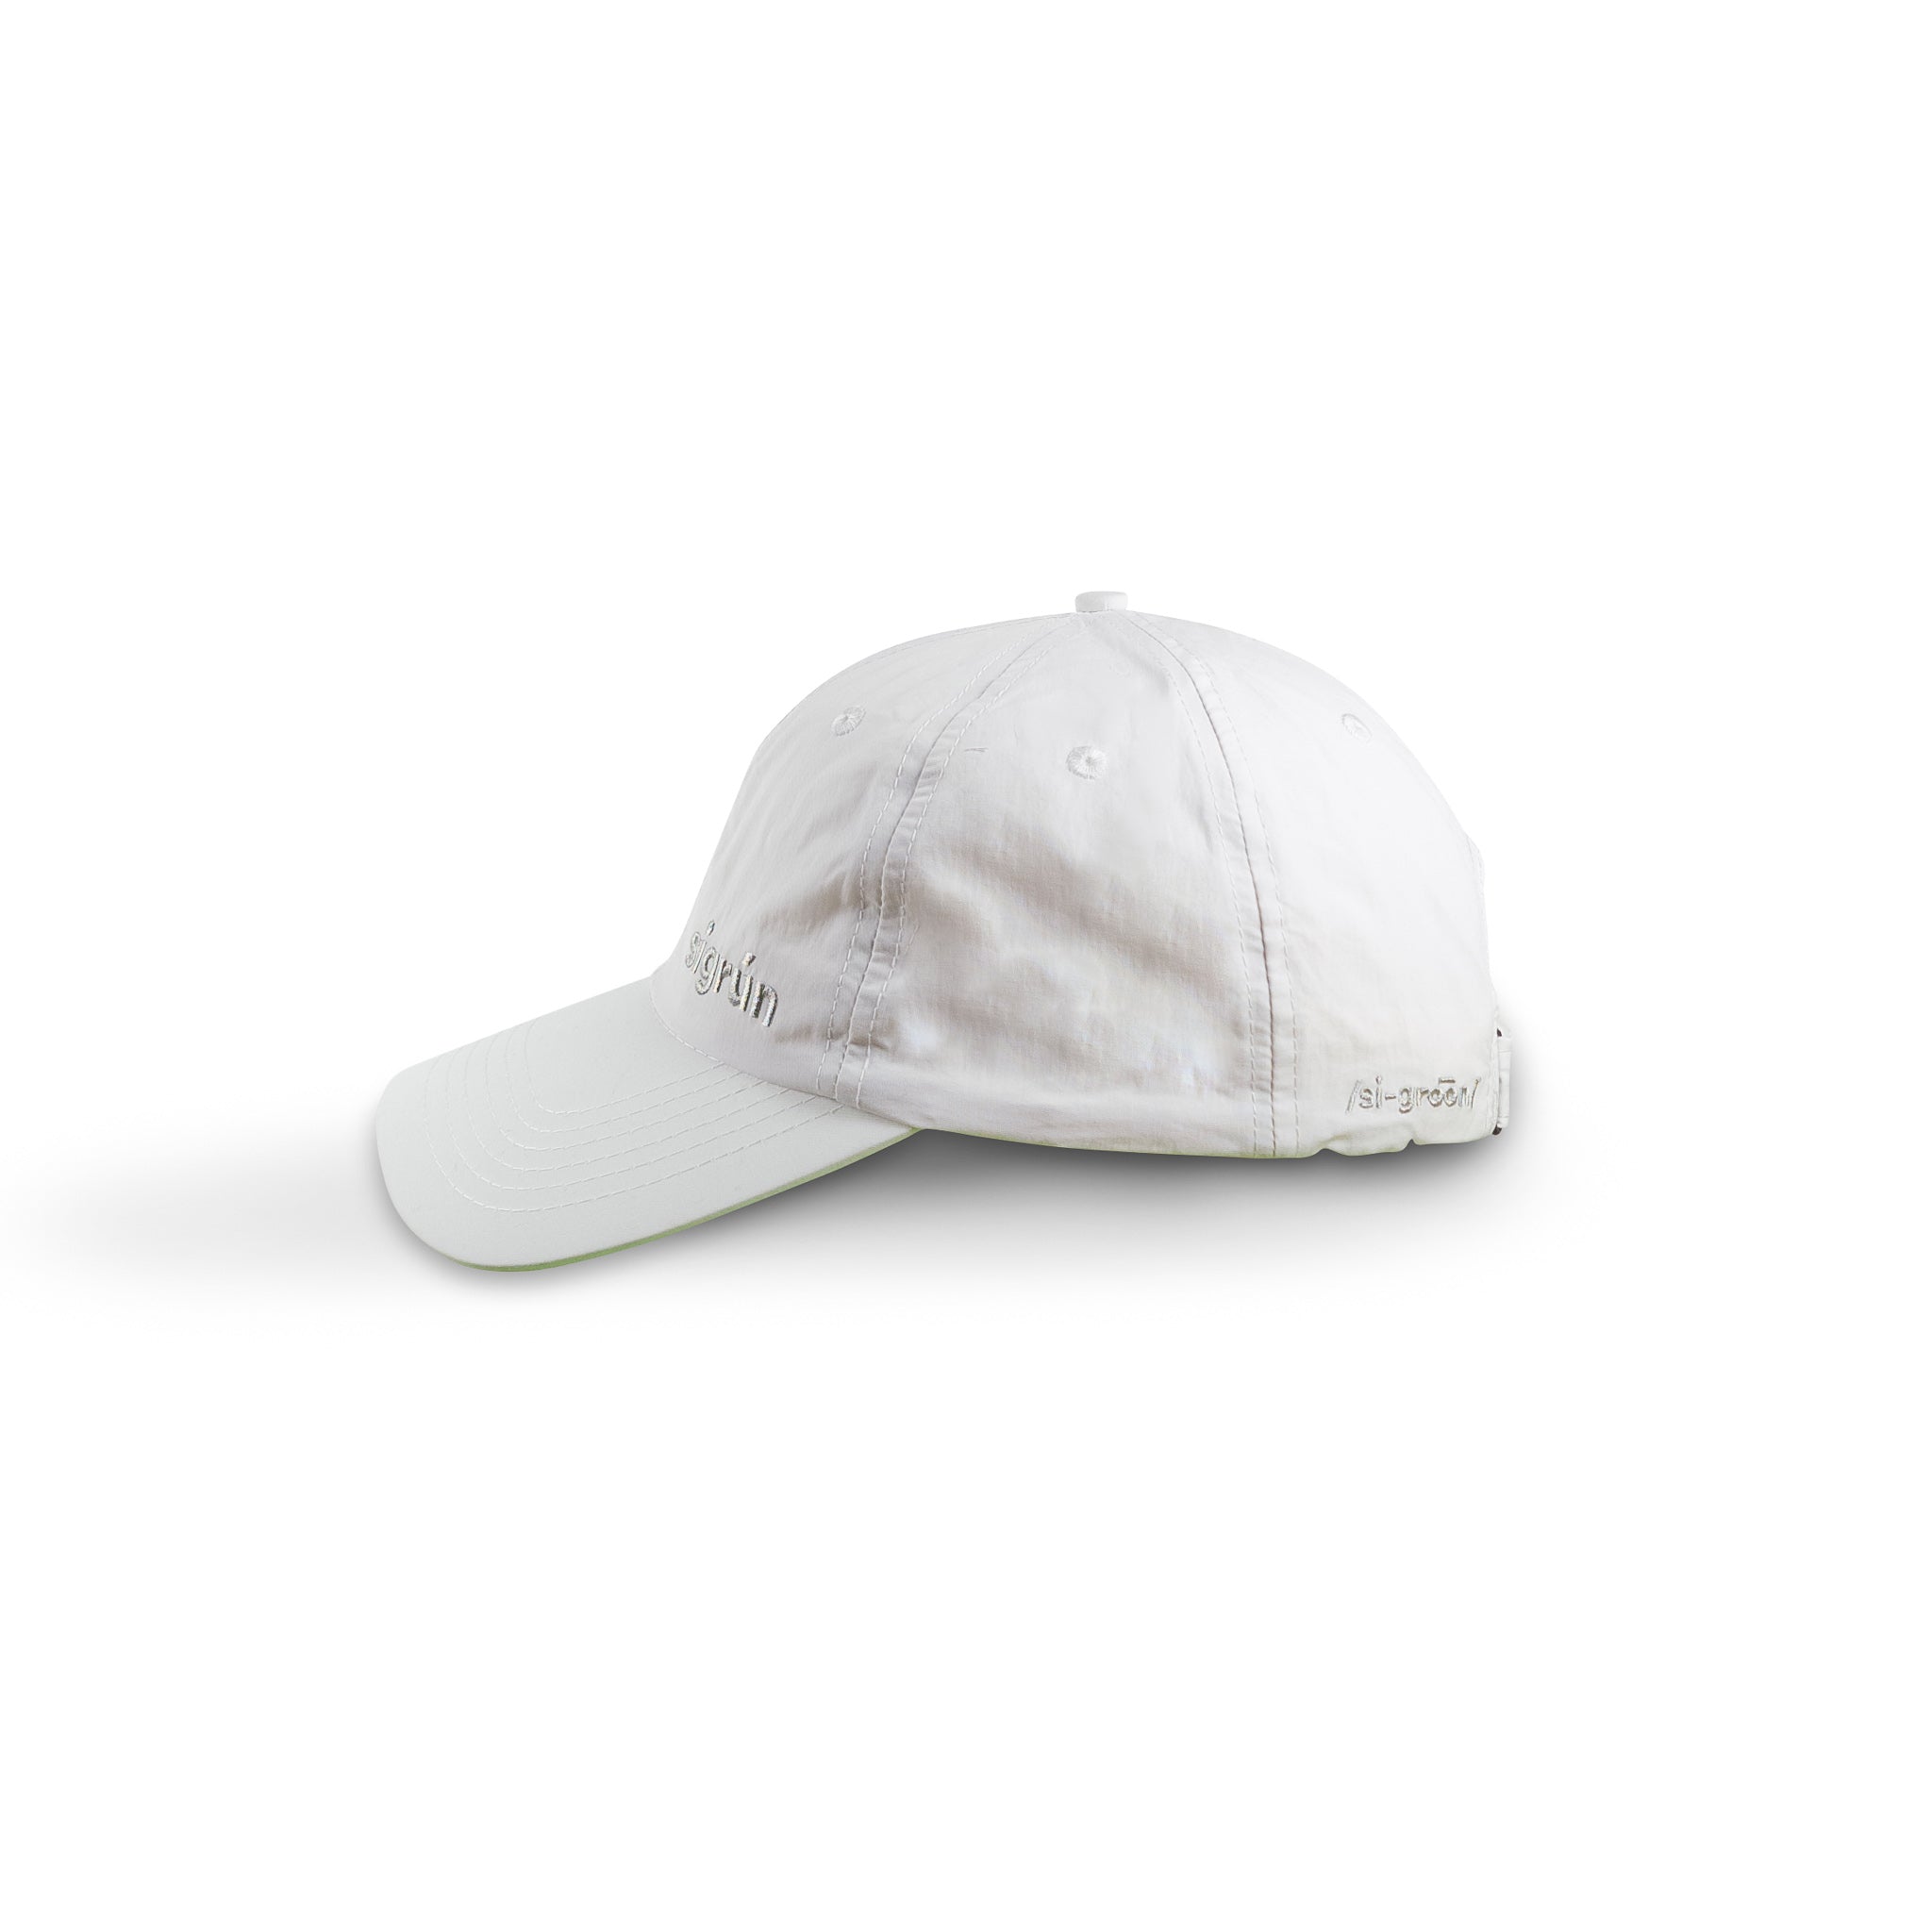 Match Performance Hat by Sigrún